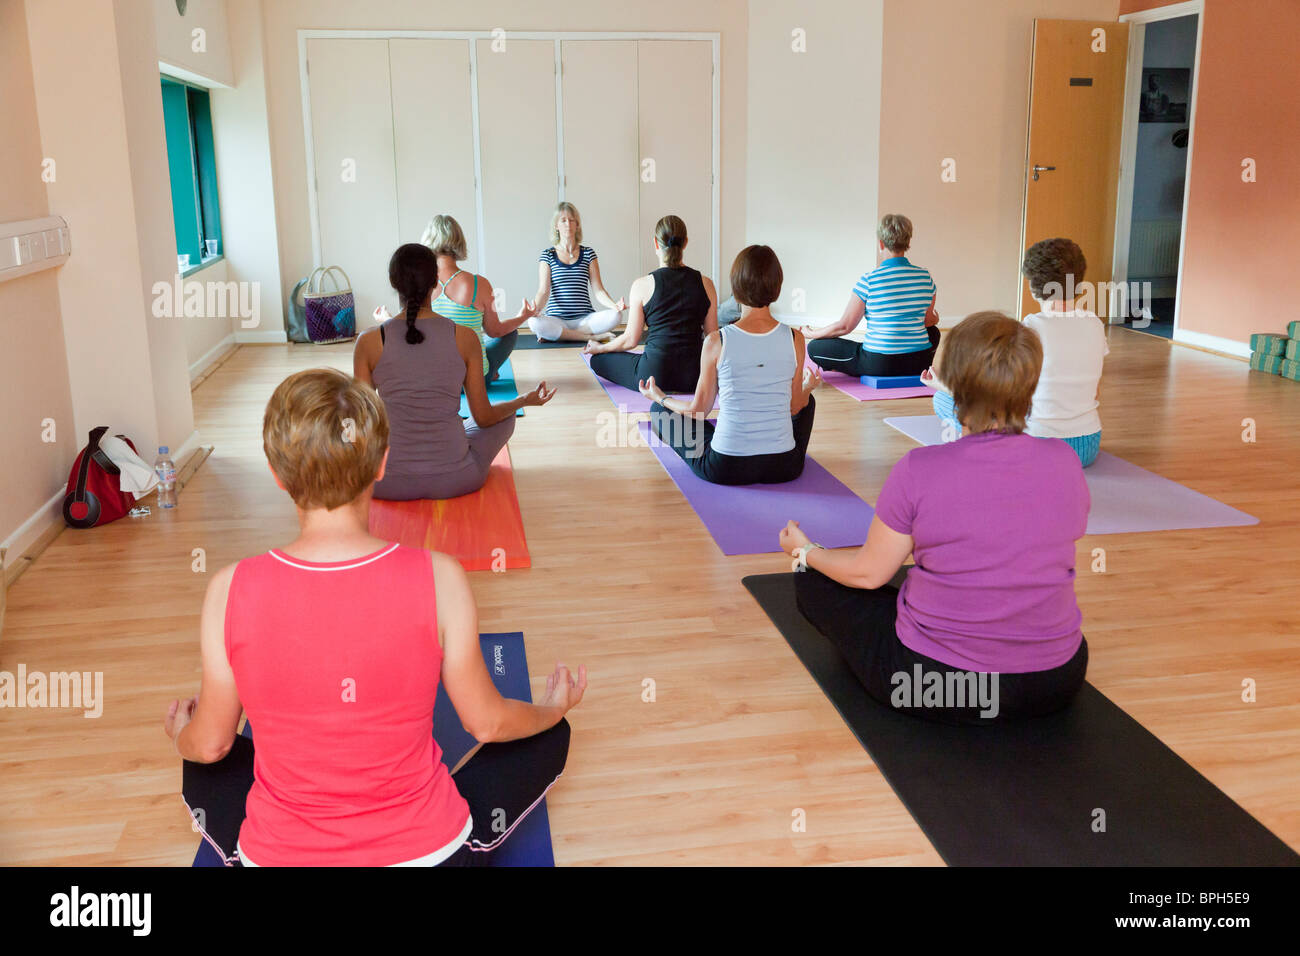 women in a meditation / yoga class Stock Photo